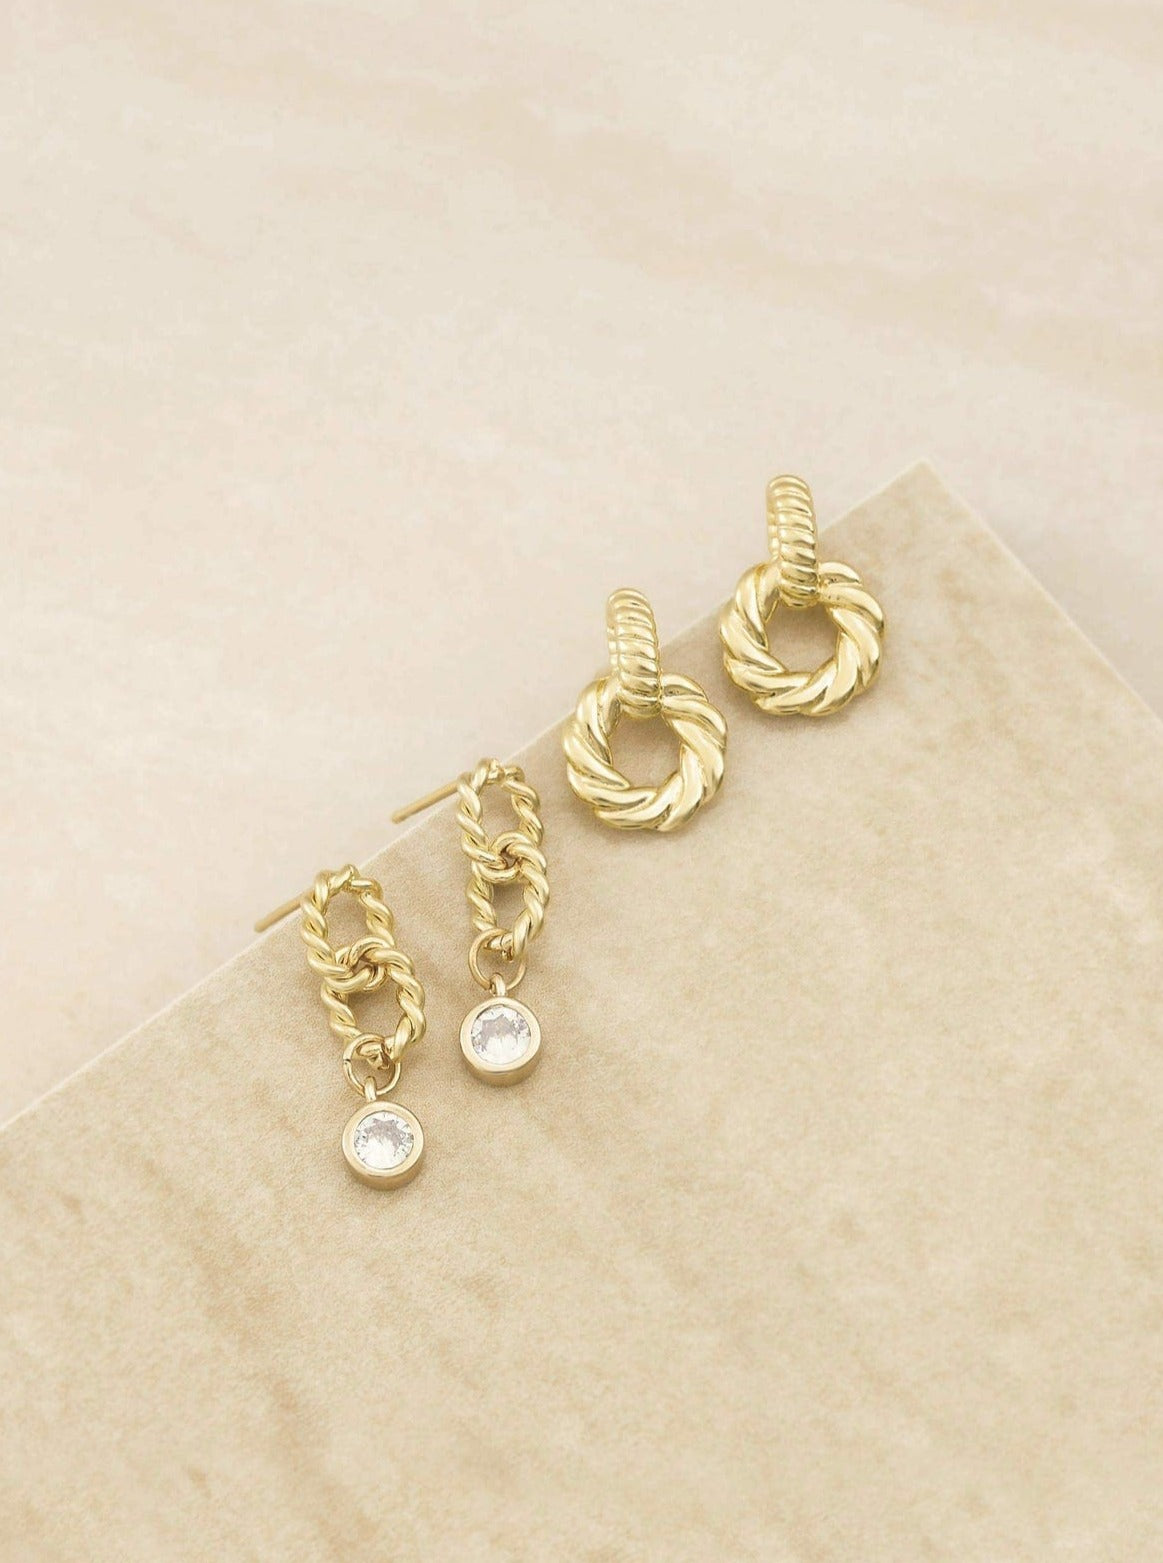 ettika earrings 18k GOLD PLATED TWISTED MINIS // EARRINGS SET